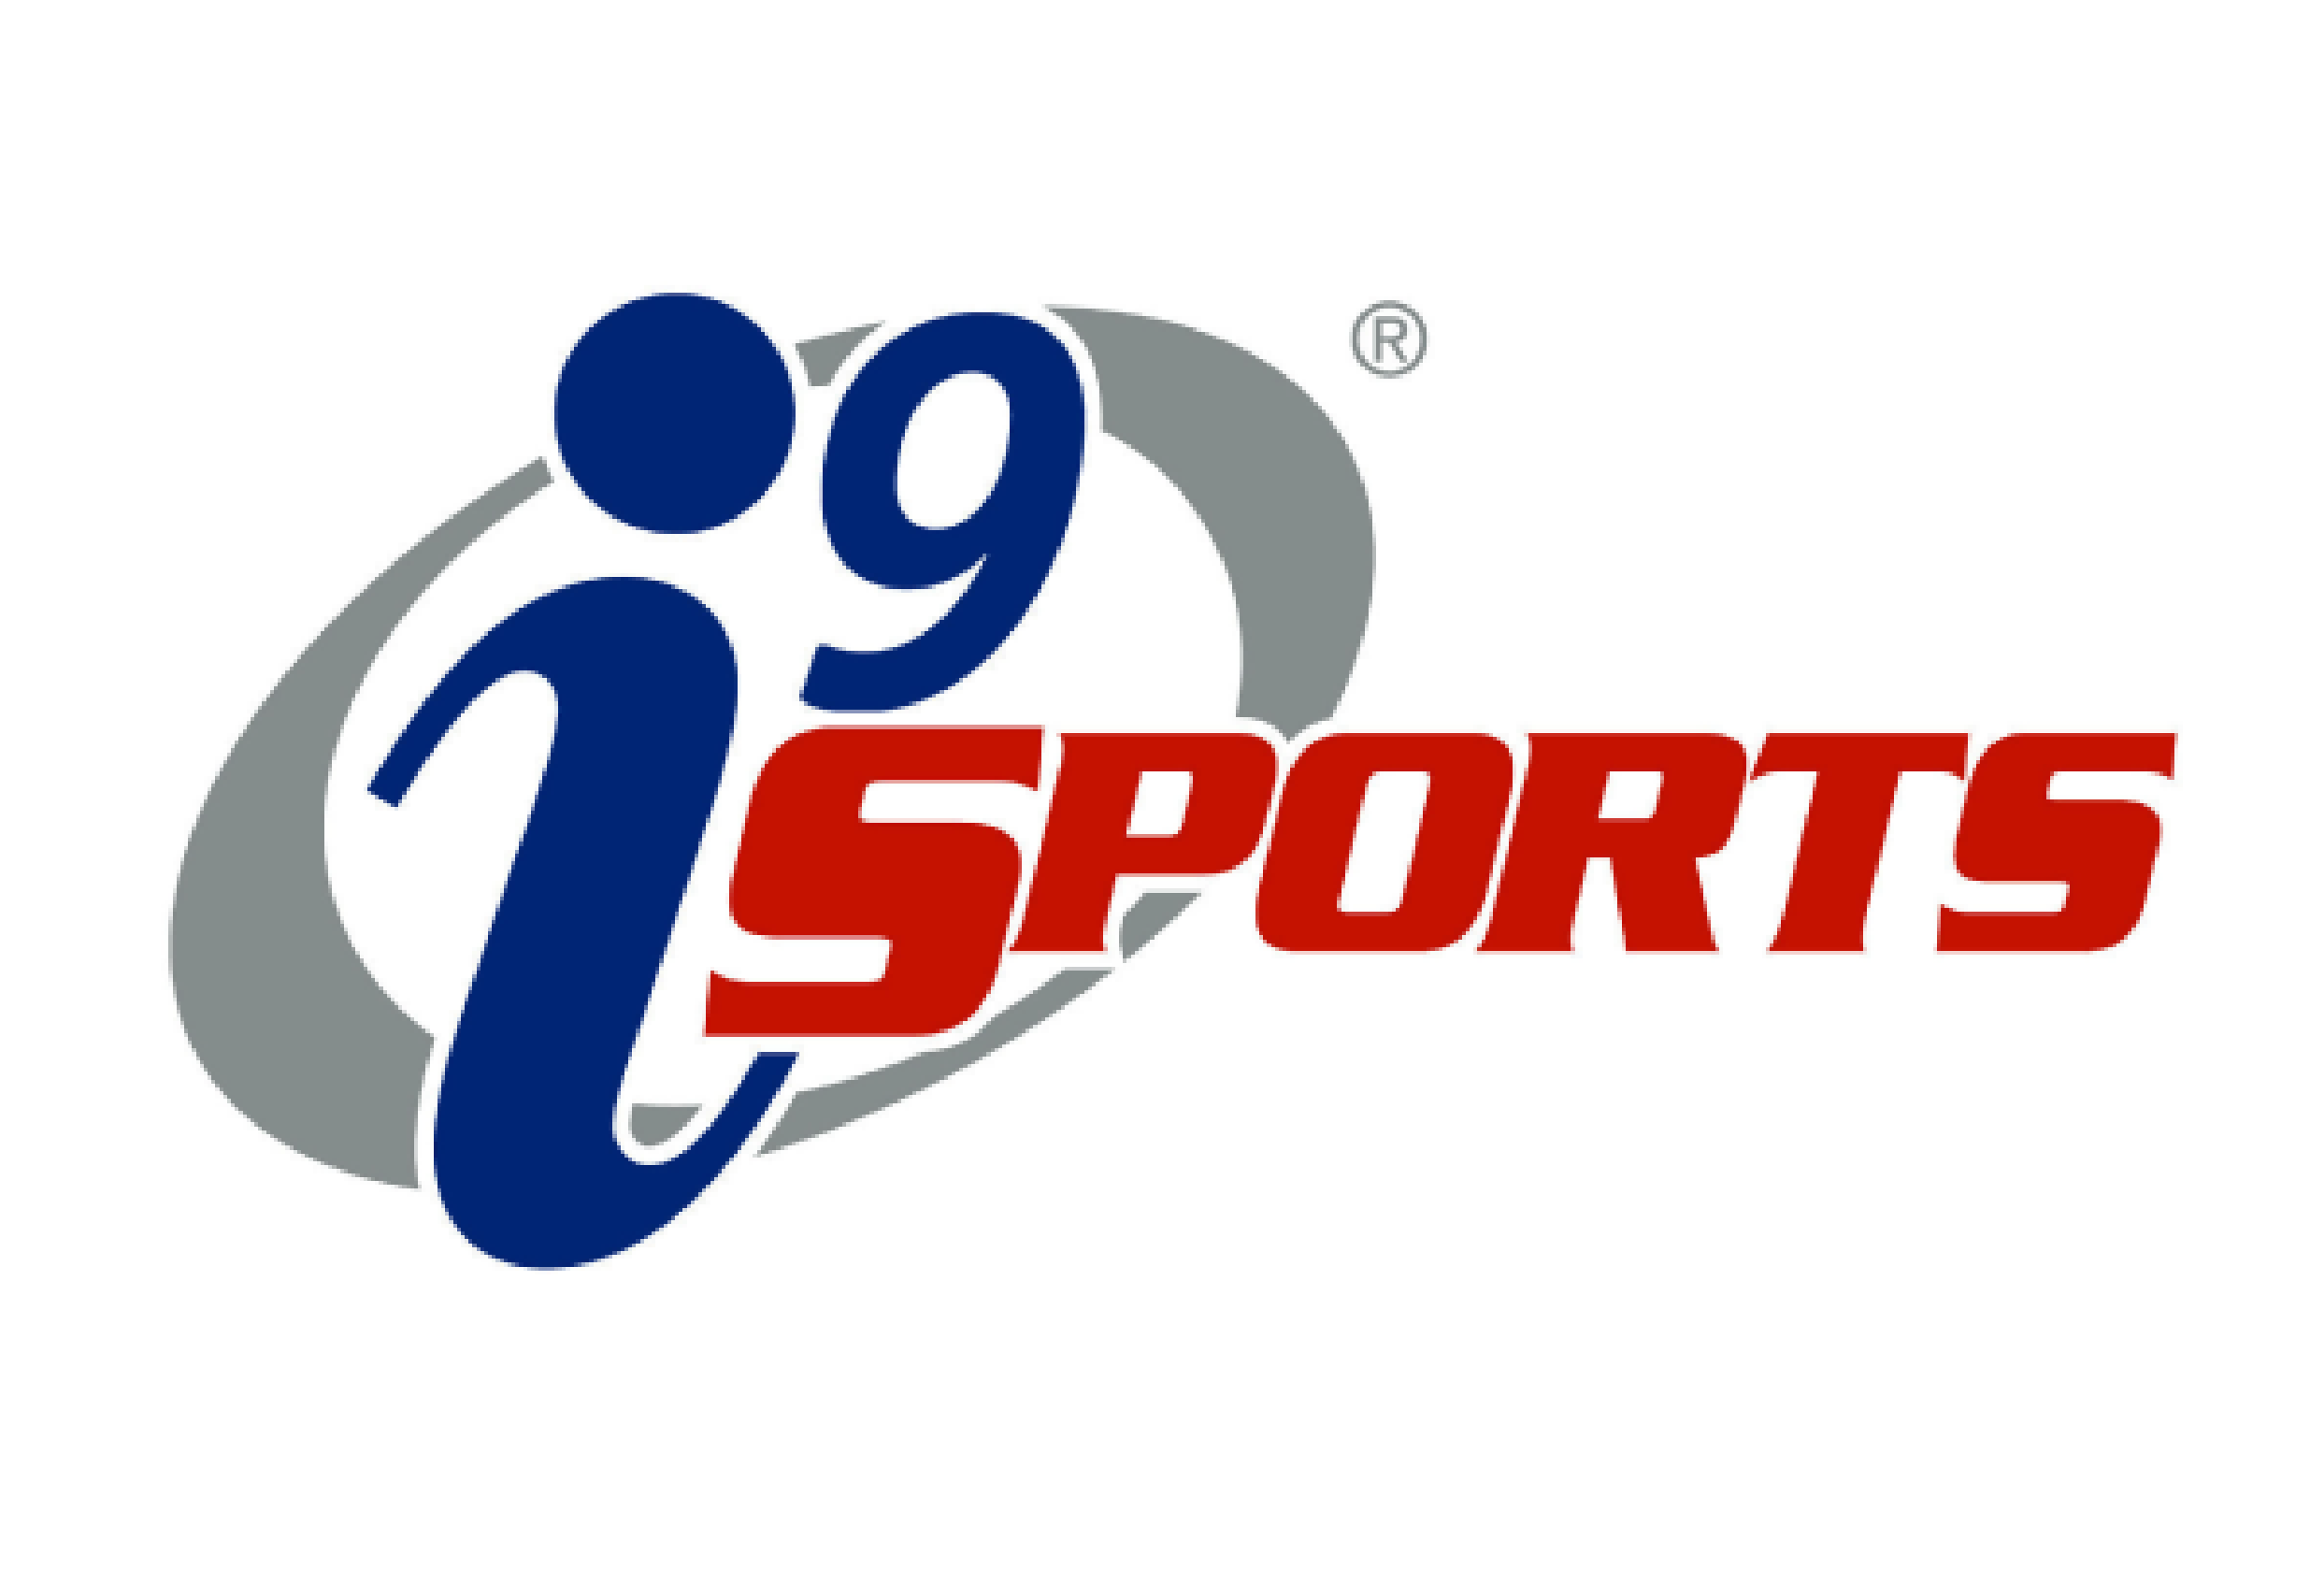 i9 Sports logo